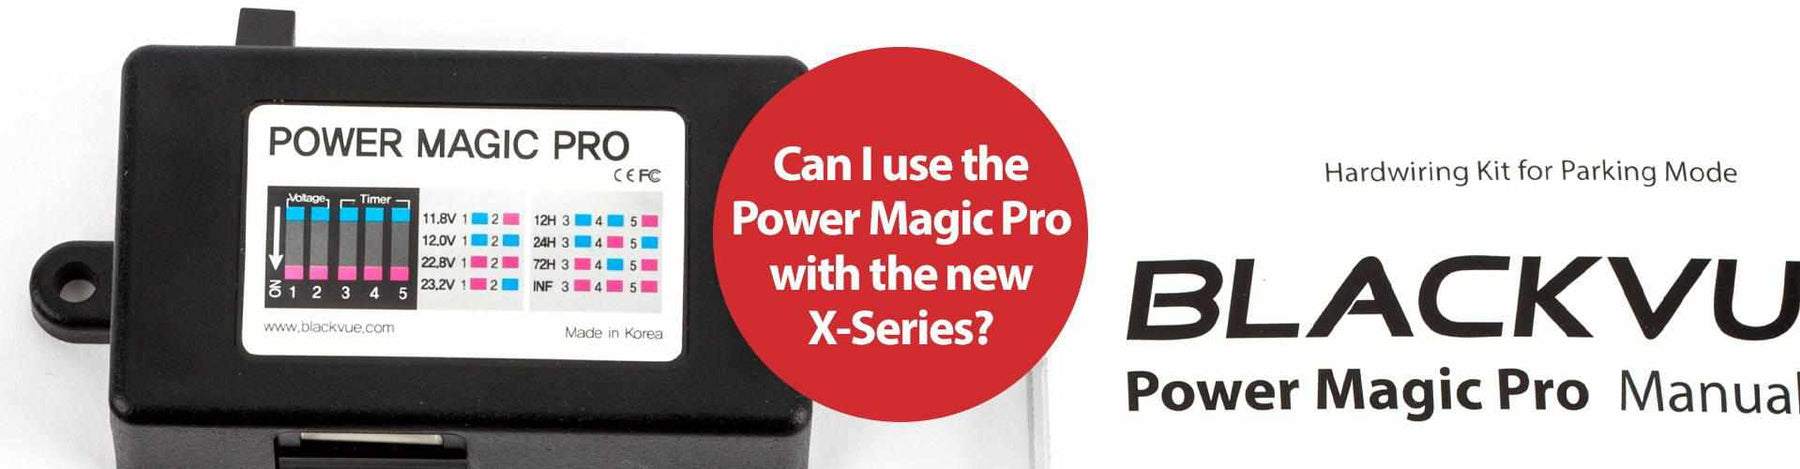 Blackvue X-Series: battery pack, hardwiring kit or PMP? - - BlackboxMyCar